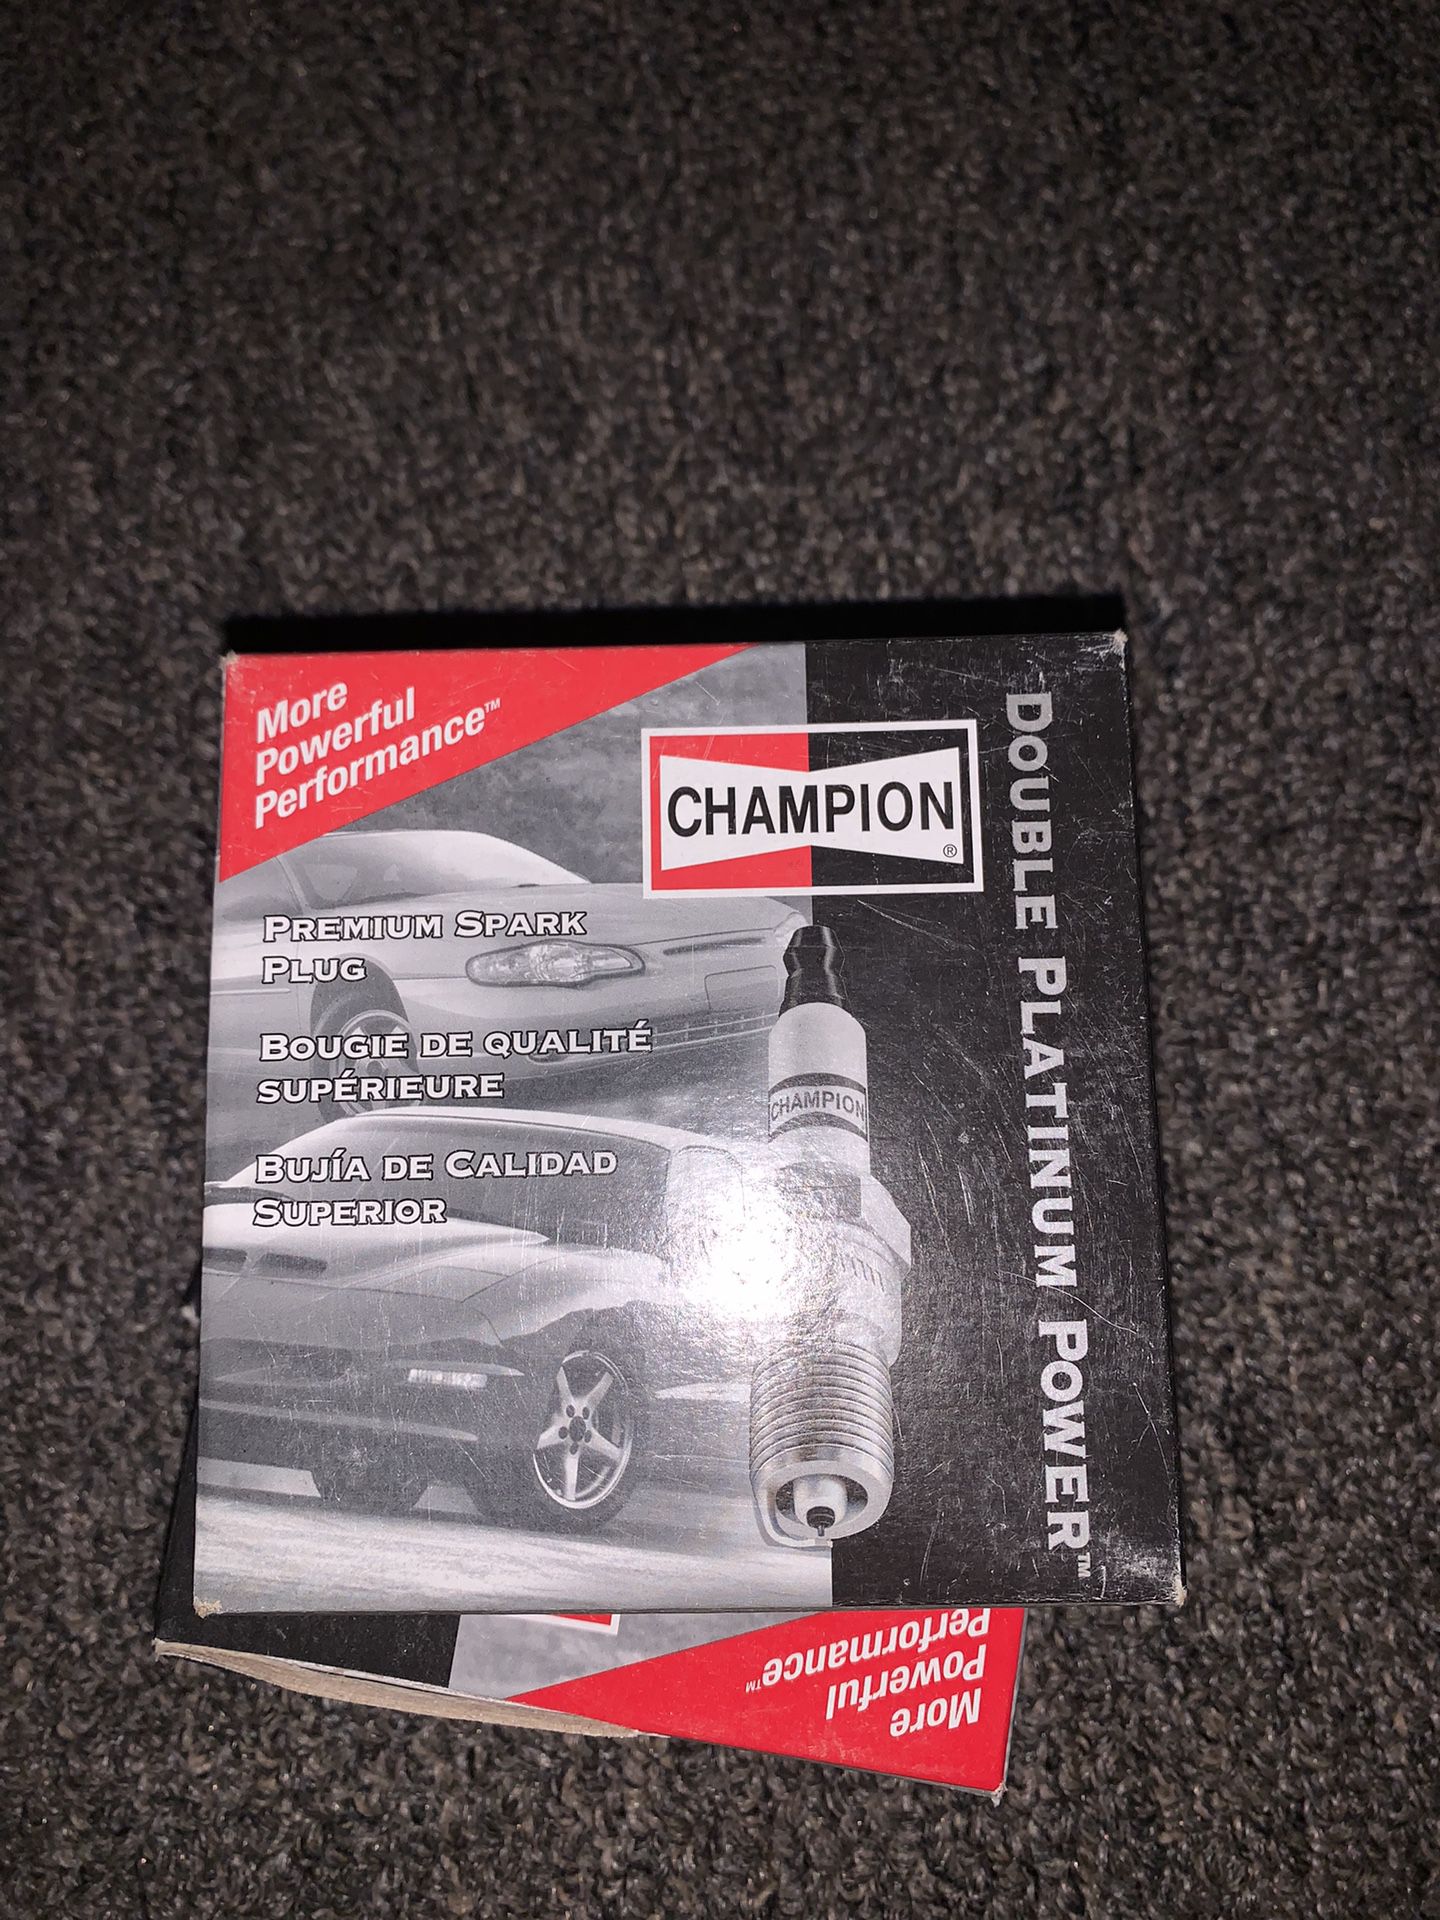 Champion 7570 Double Platinum Spark Plugs